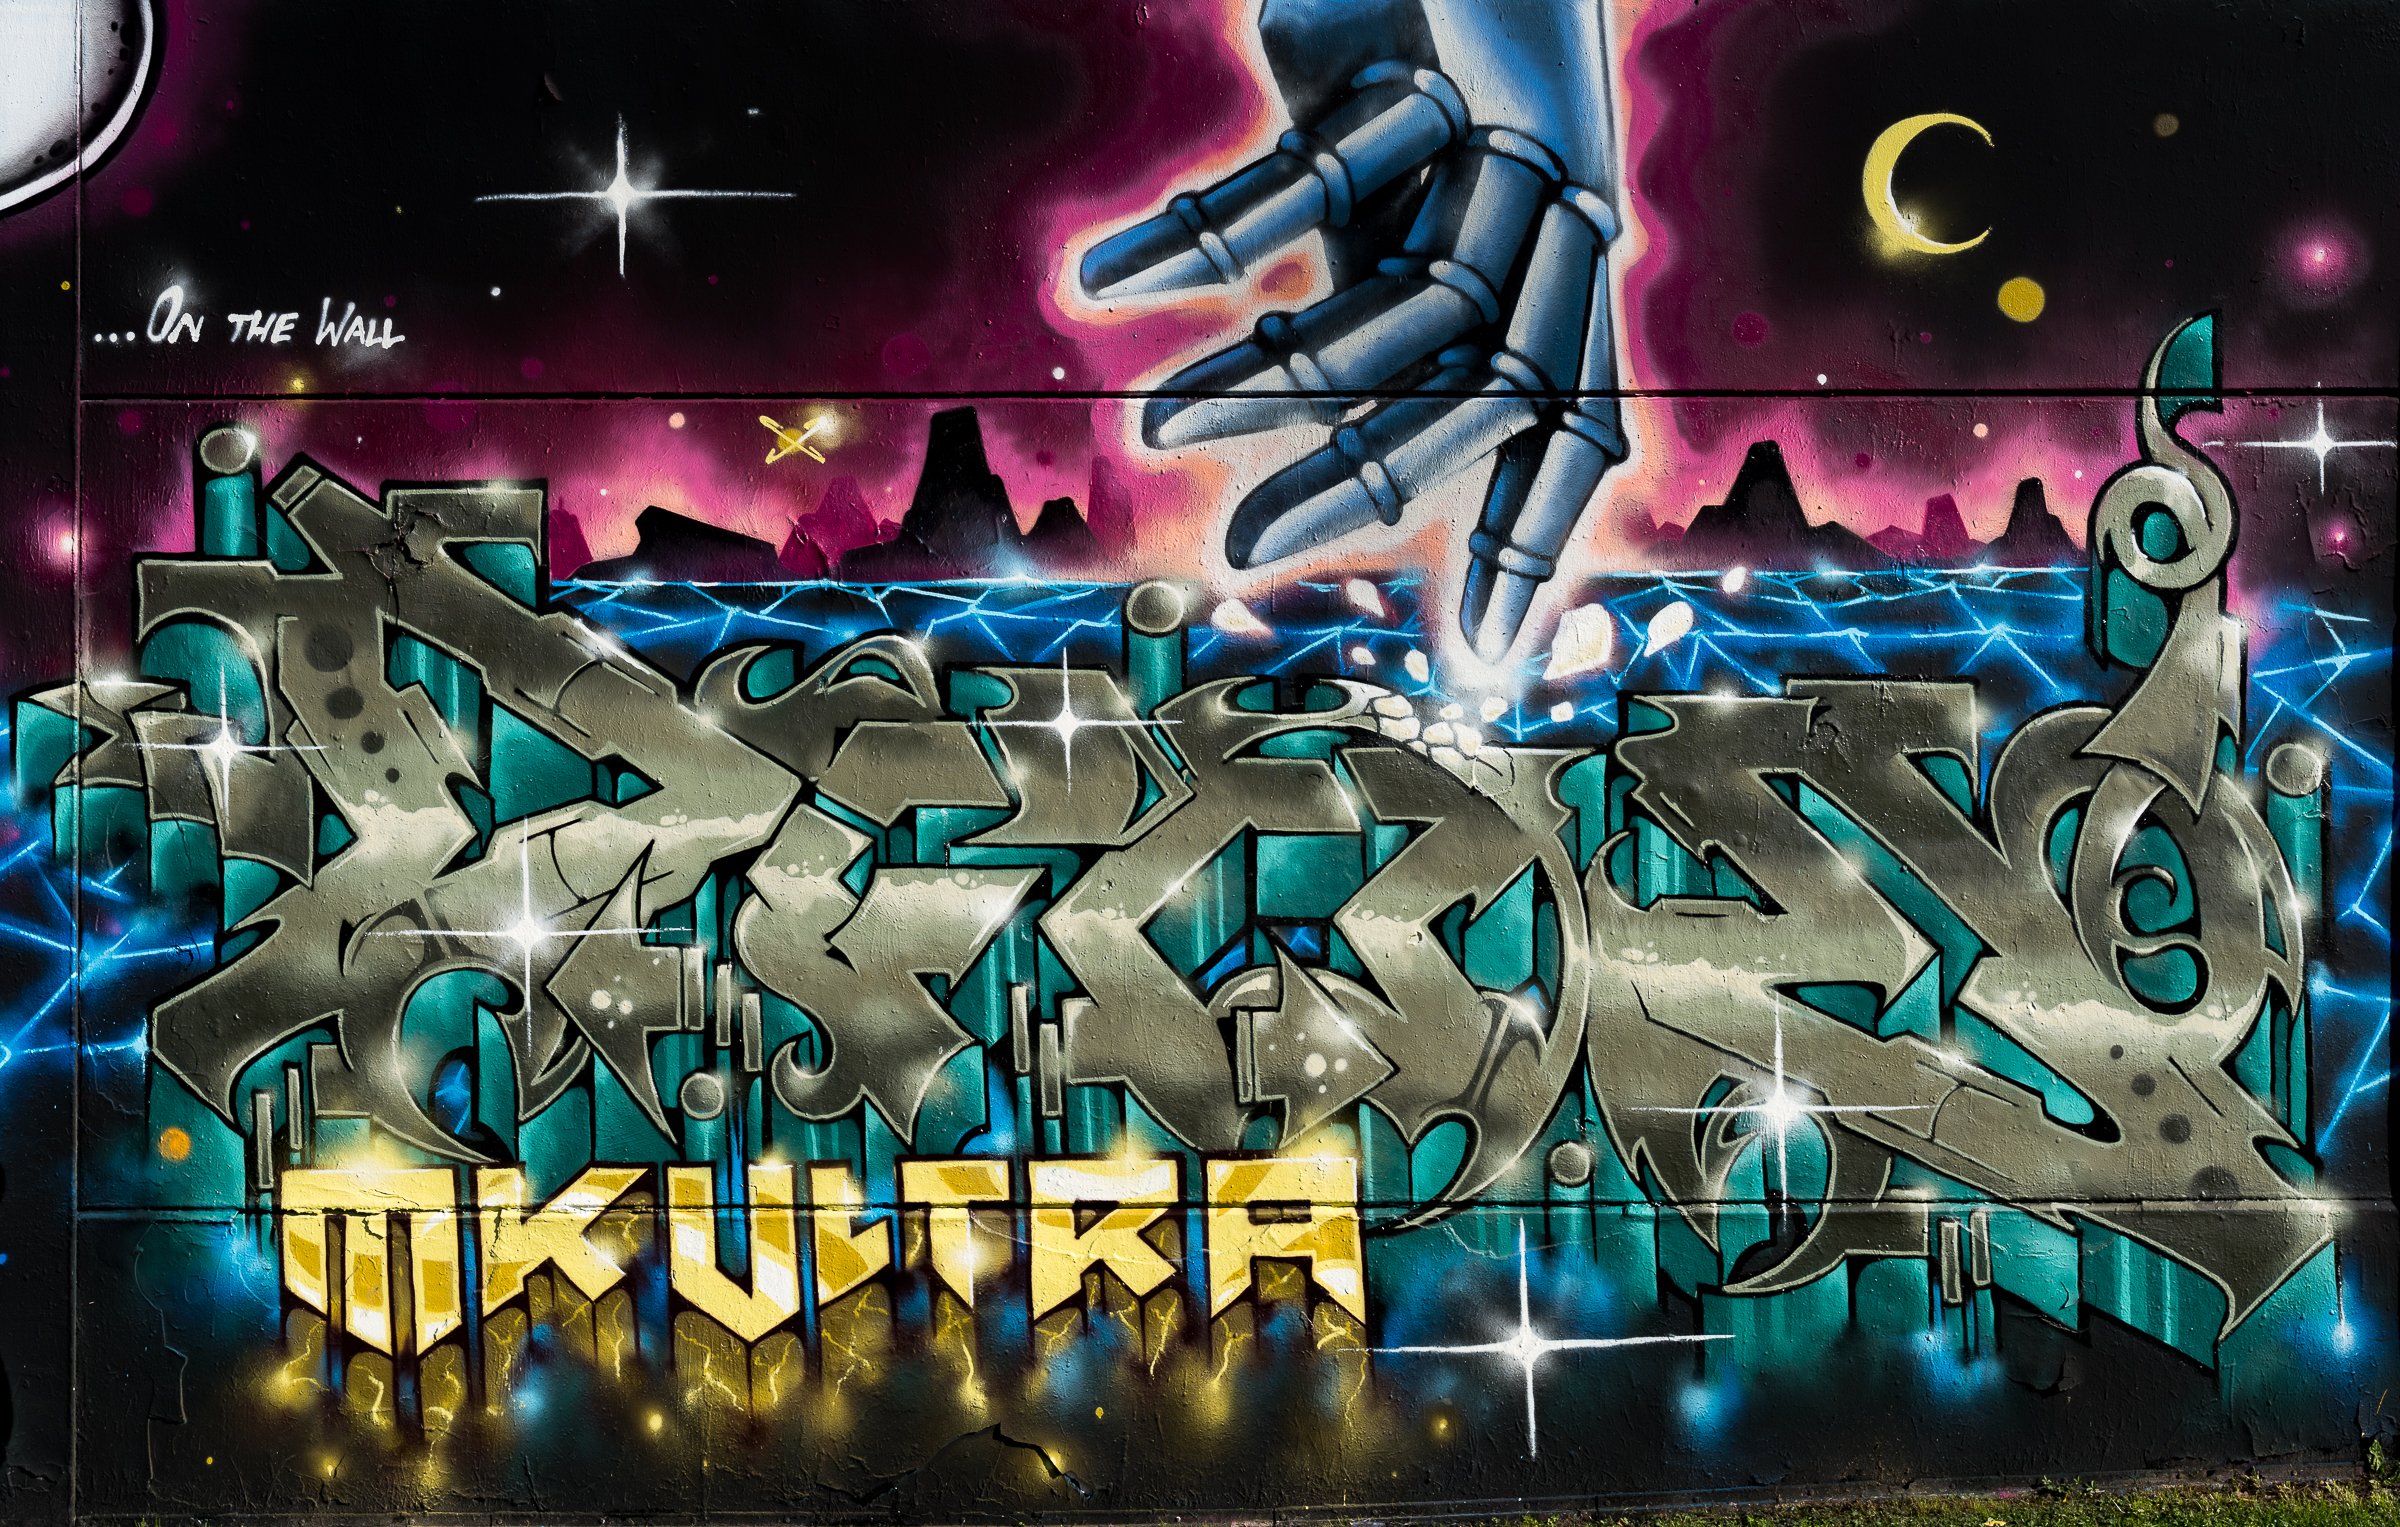 Graffito MK Ultra